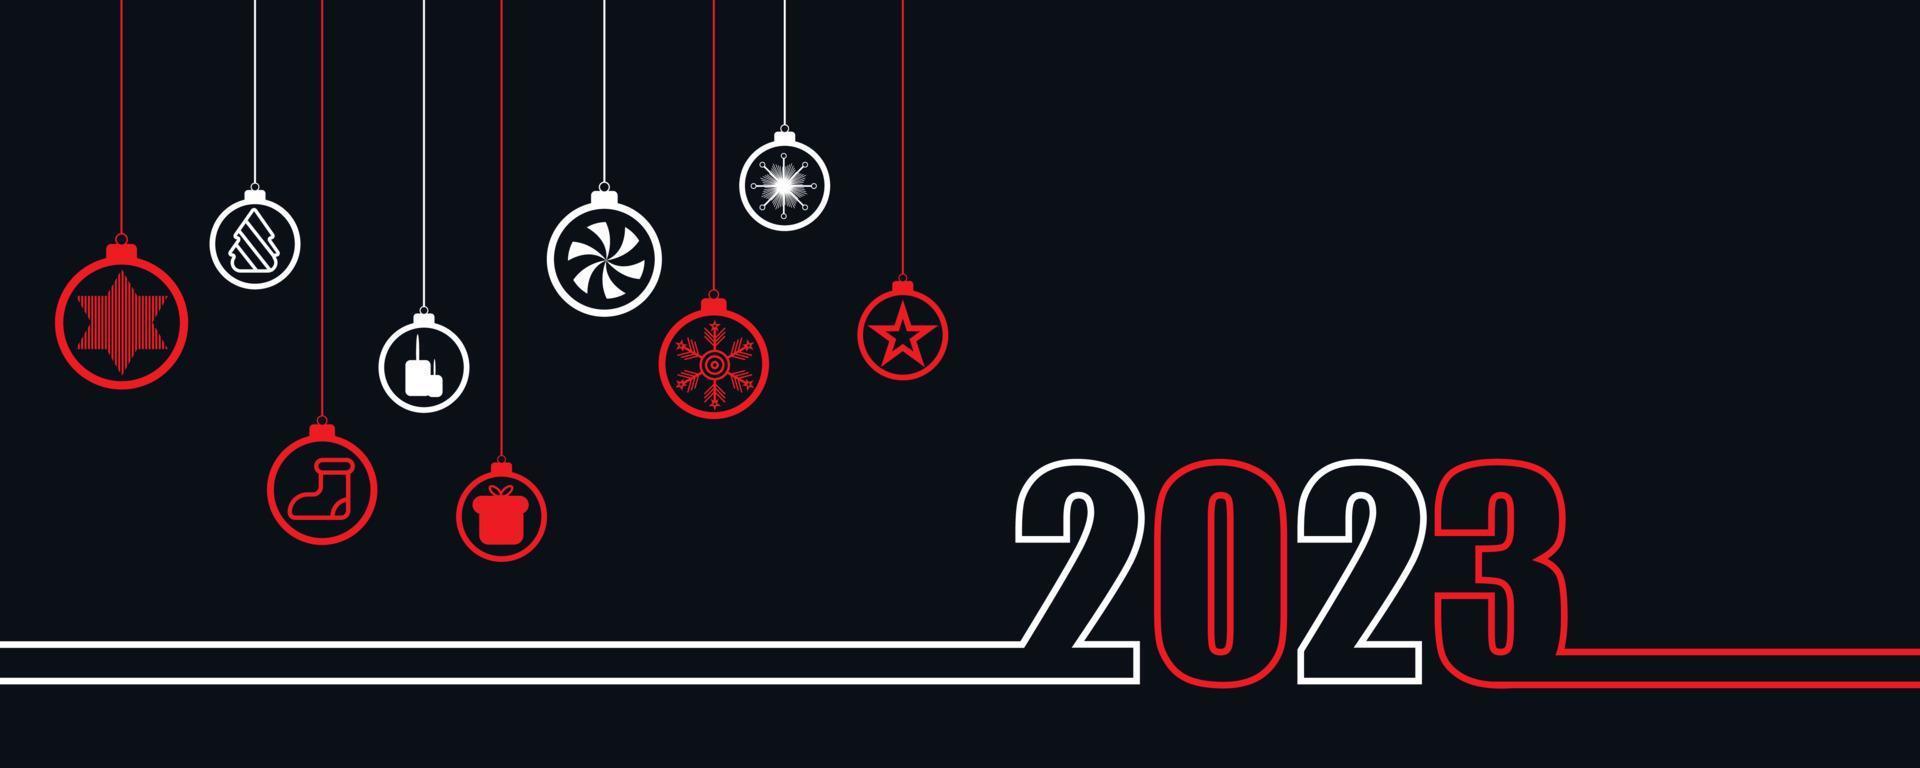 Happy new year 2023, 2023 happy new year event happy new year background illustration Christmas banner Background Xmas design vector